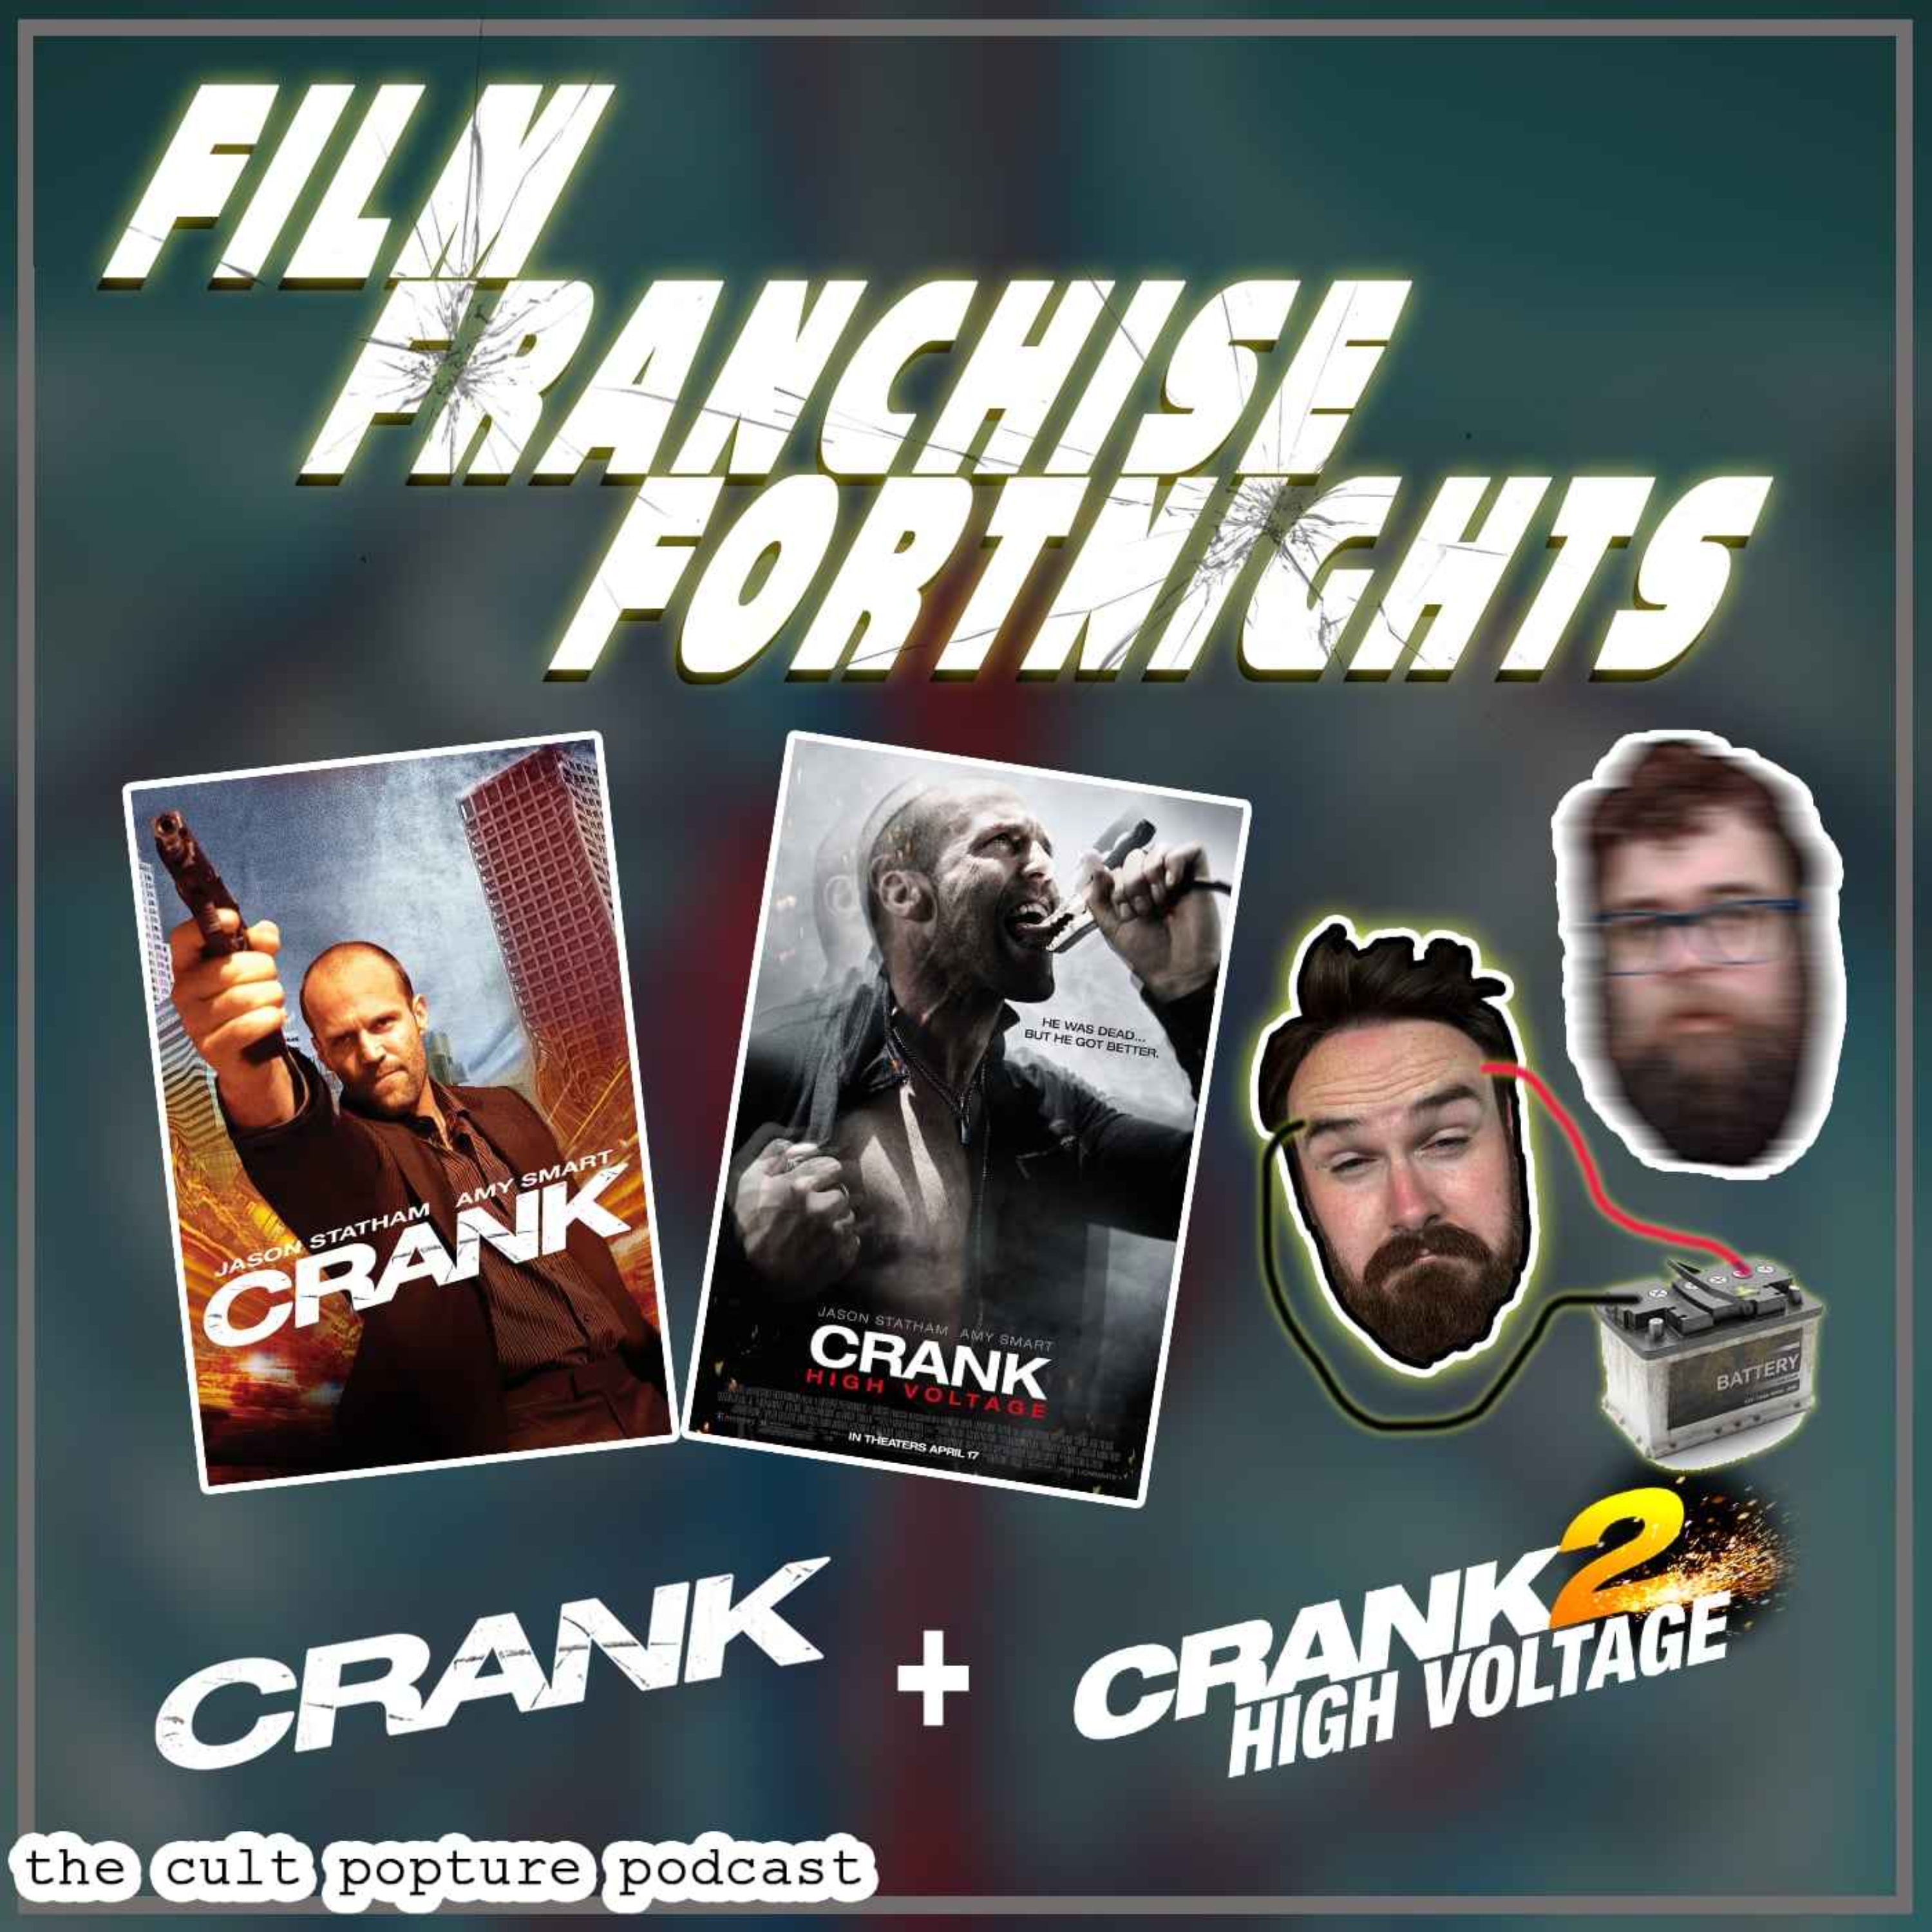 "Crank" and "Crank 2: High Voltage" | Film Franchise Fortnights